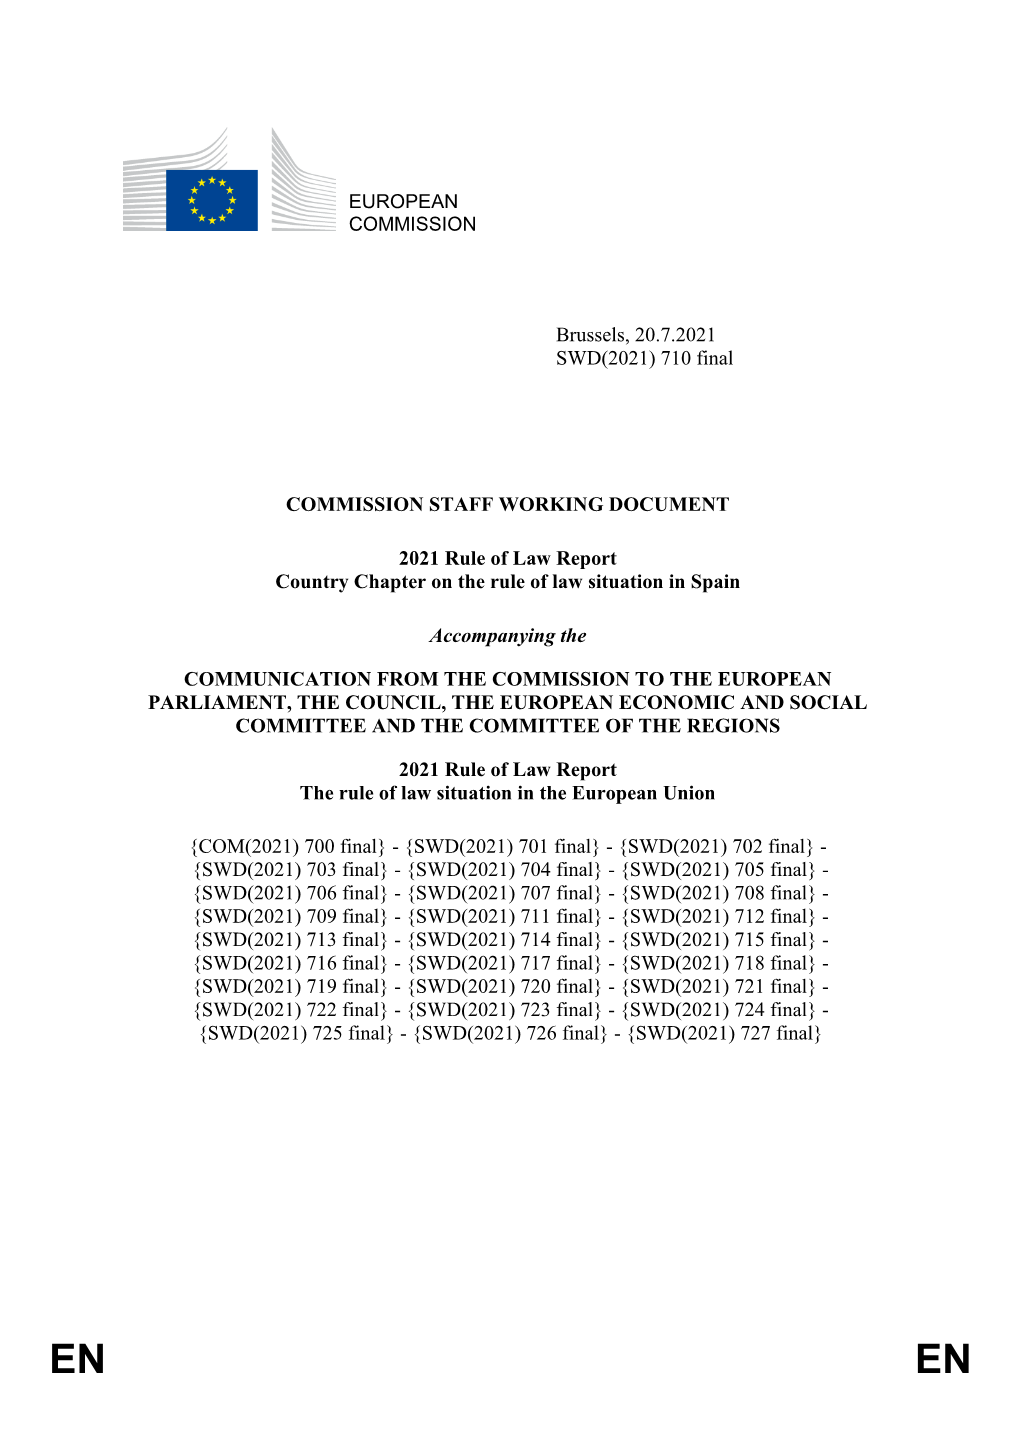 EUROPEAN COMMISSION Brussels, 20.7.2021 SWD(2021) 710 Final